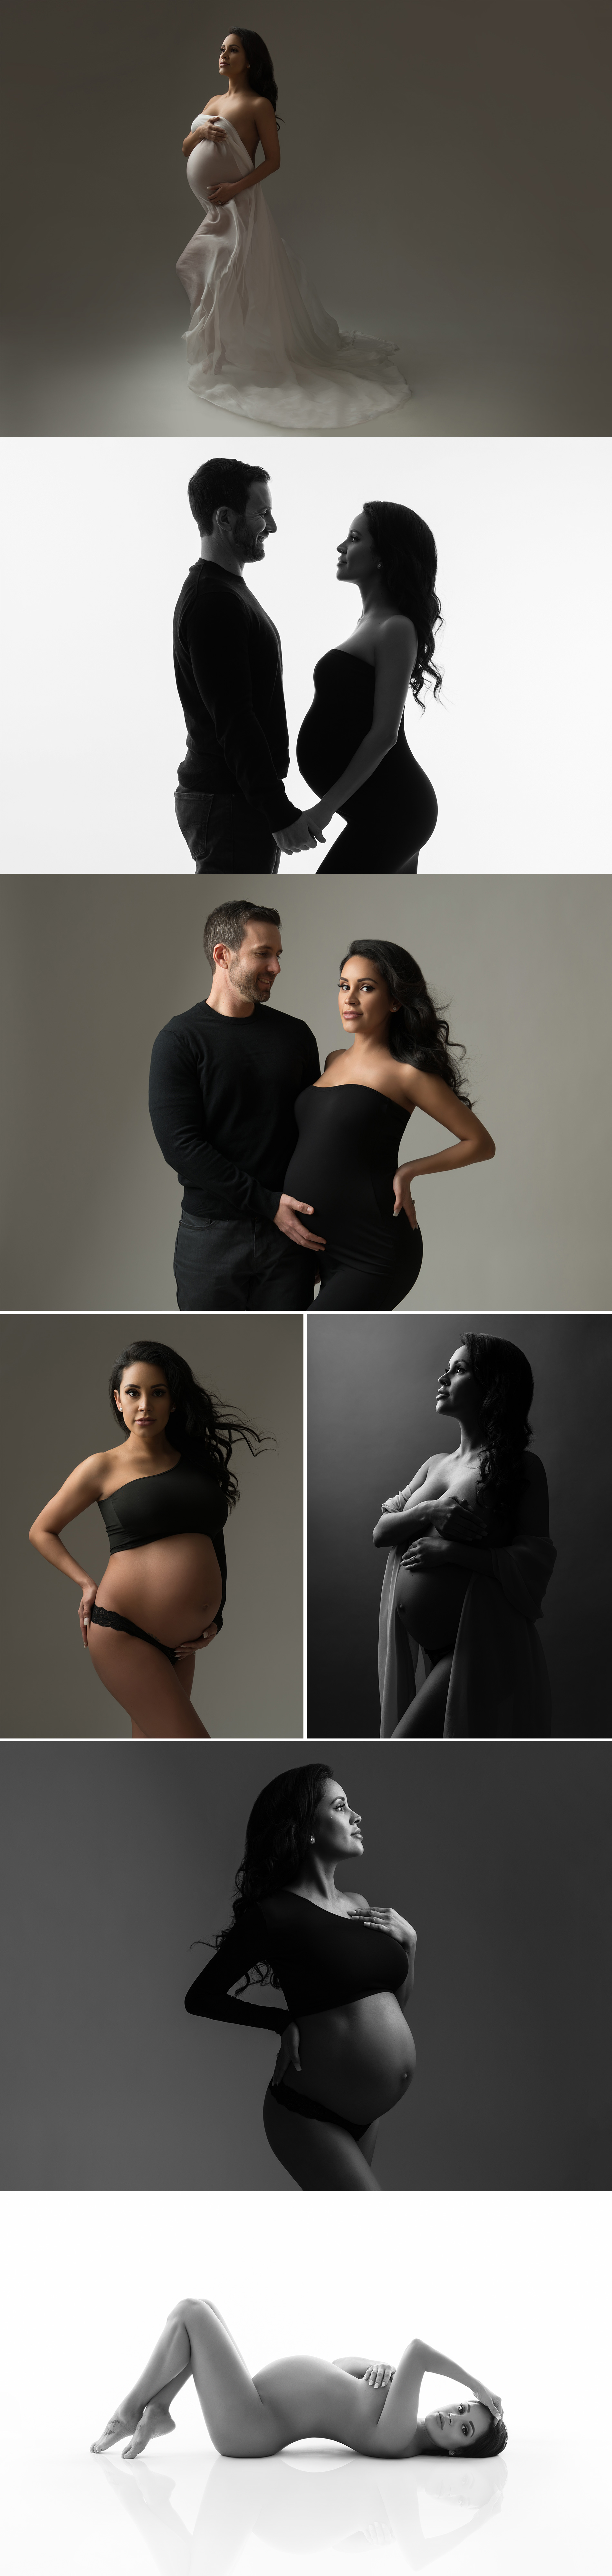 breathtaking maternity portraits